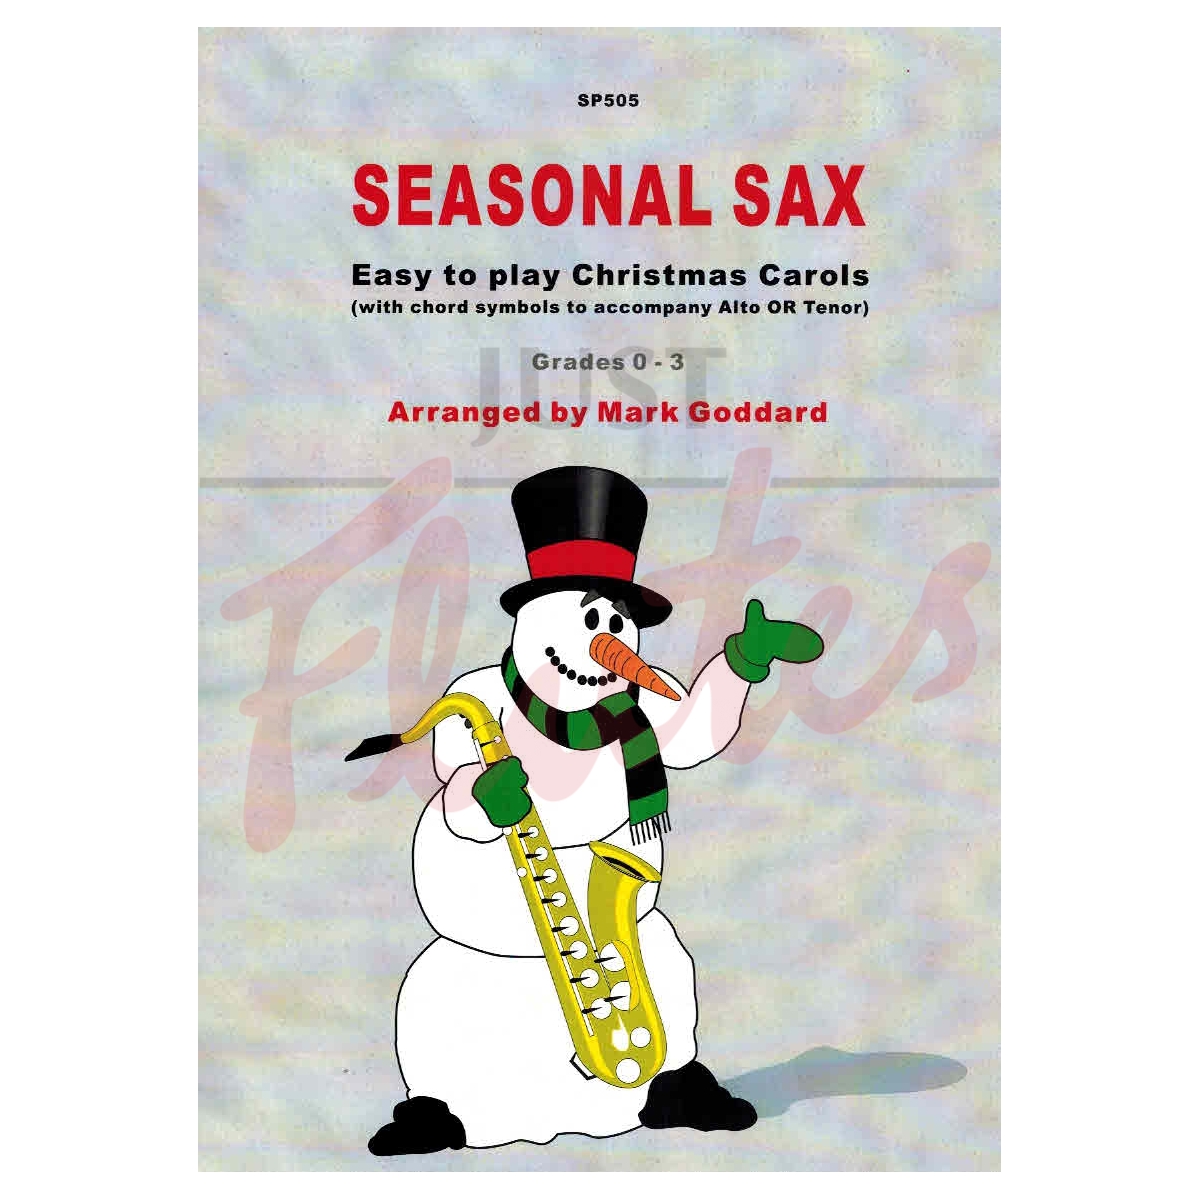 Seasonal Sax